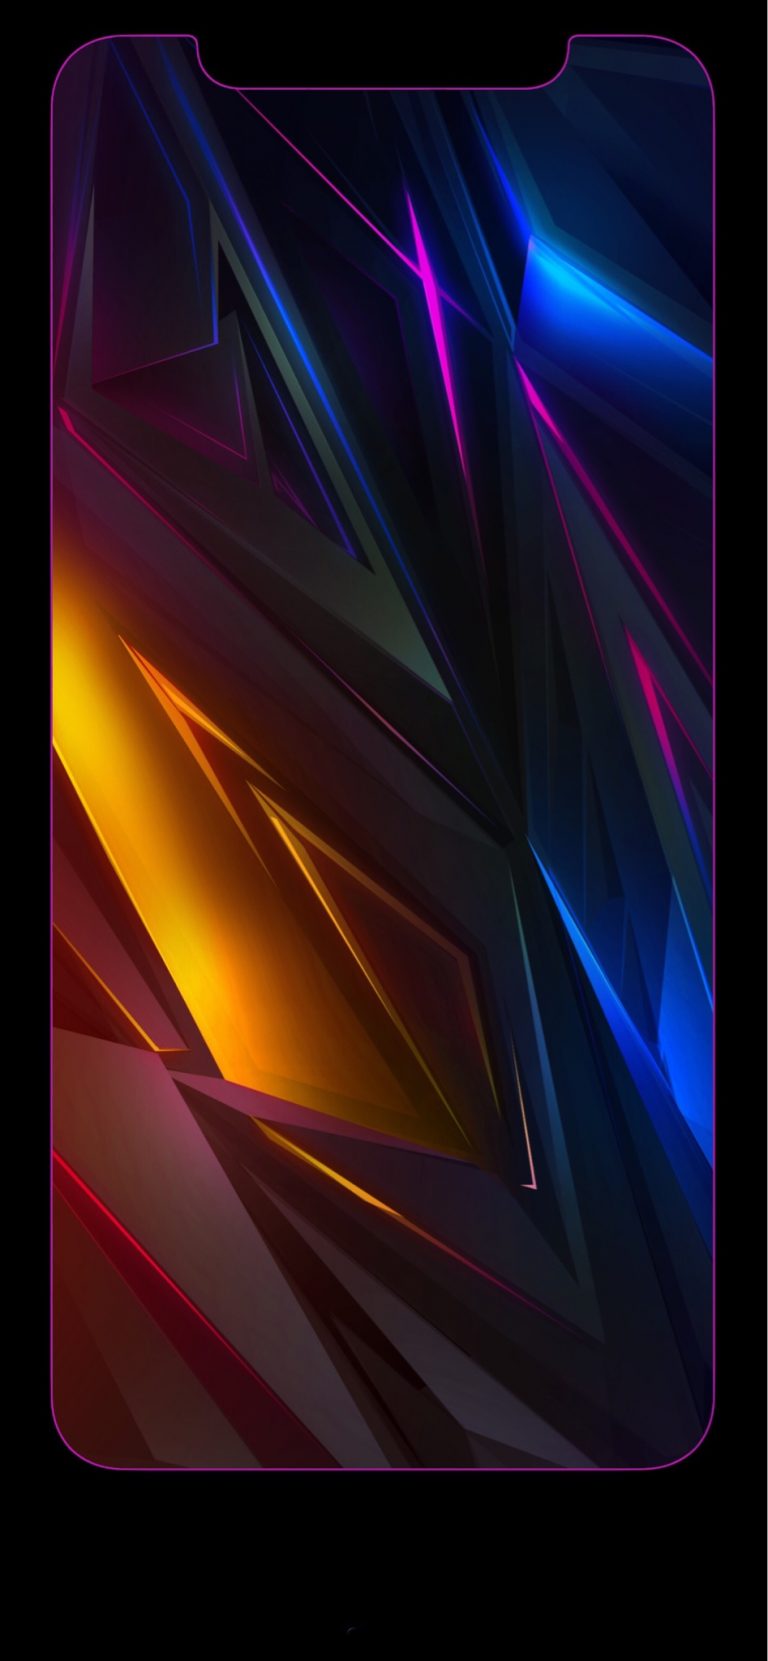 Download Iphone 12 Pro Max Rainbow Border Wallpaper Images